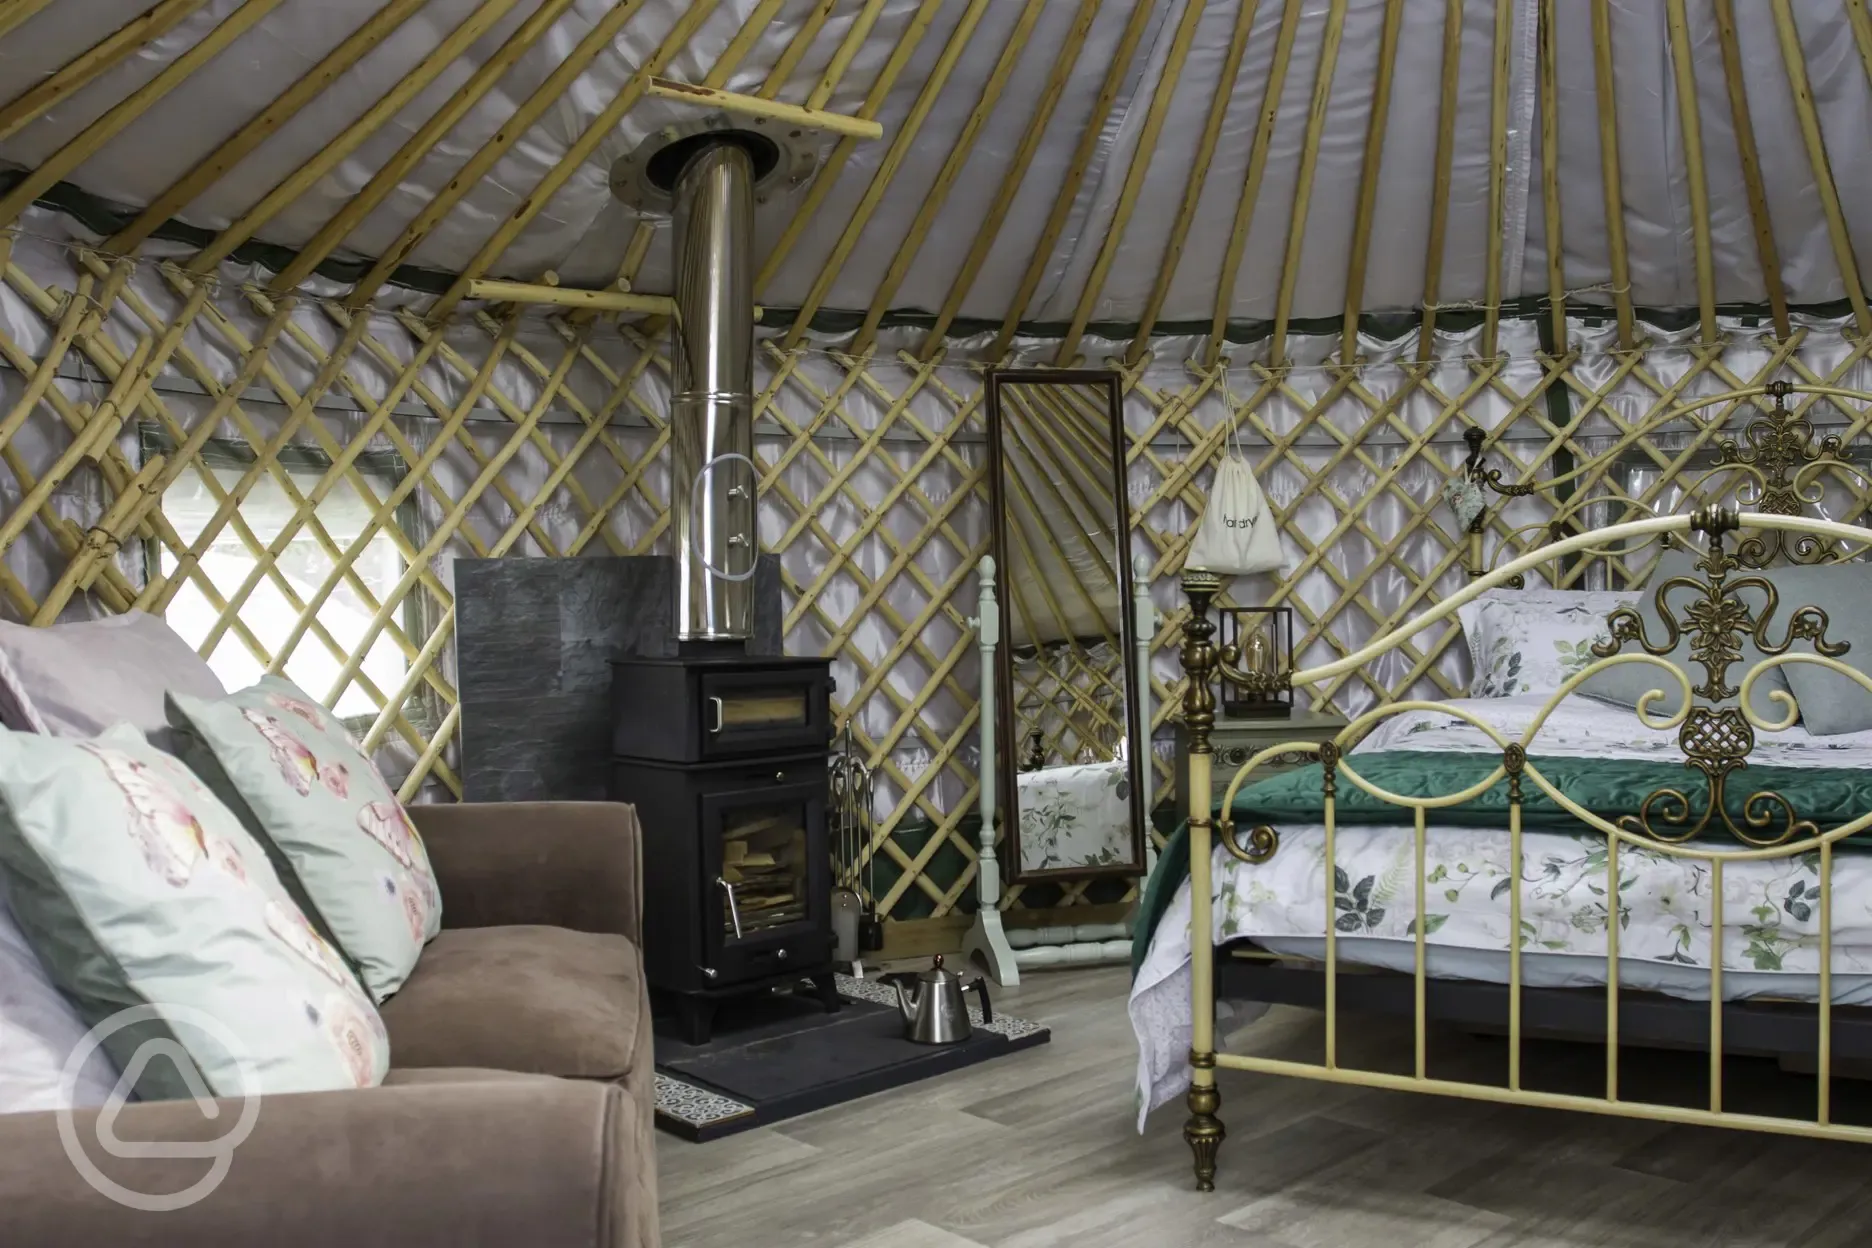 Horse Chestnut yurt with hot tub interior